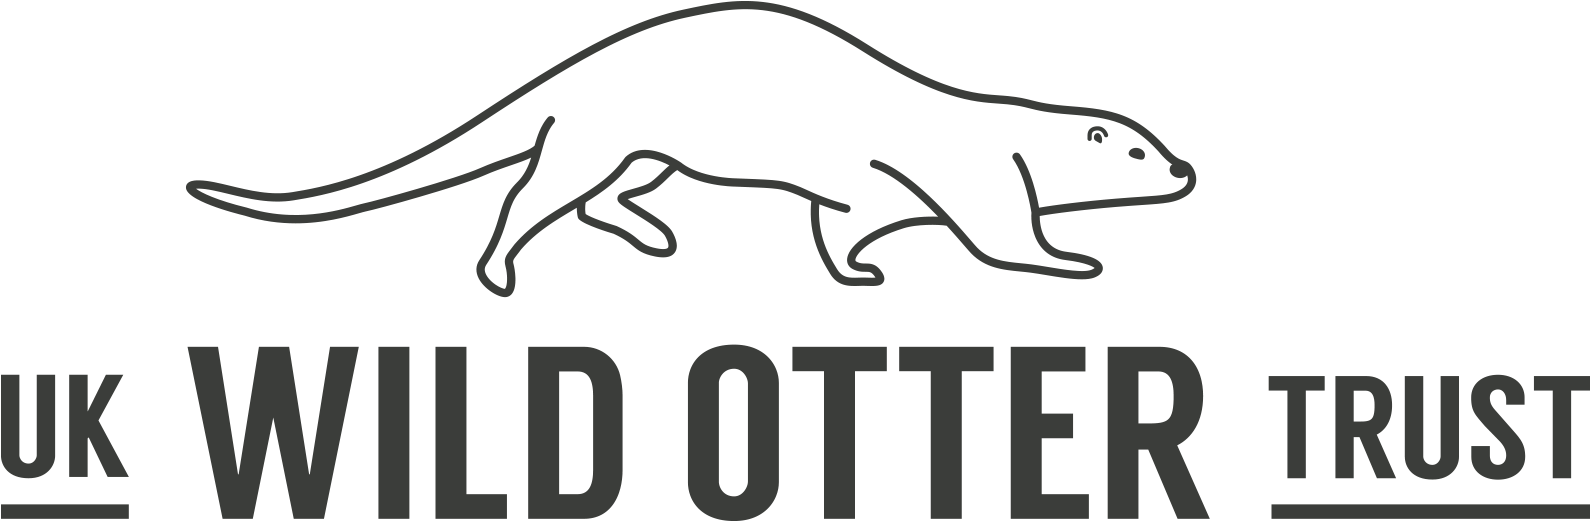 U K Wild Otter Trust Logo PNG